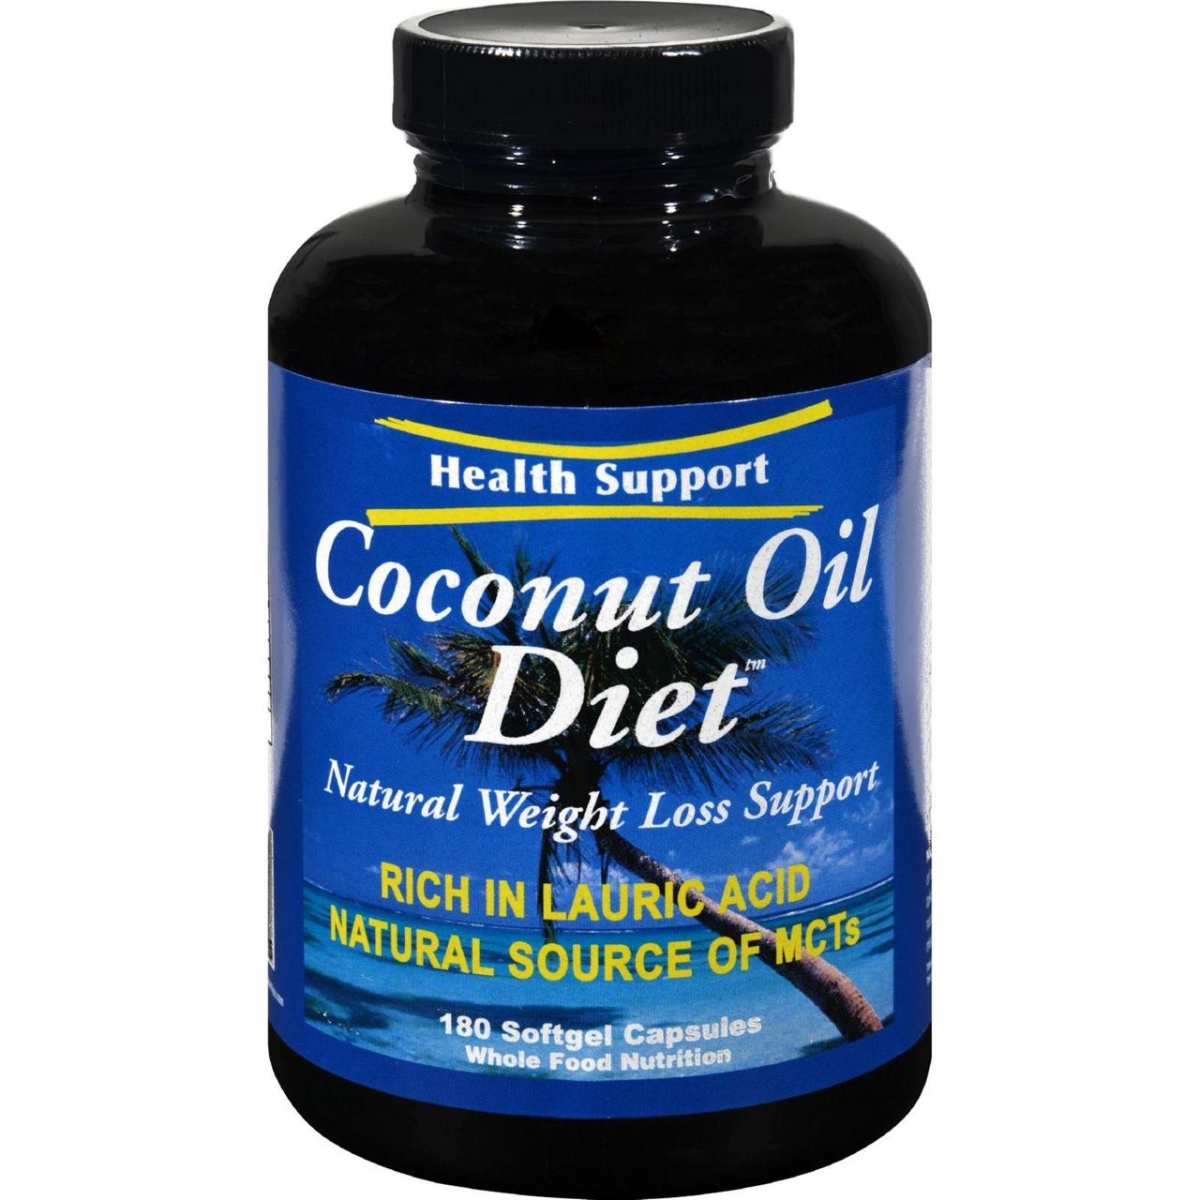 Hg0173534 Coconut Oil Diet - 180 Softgel Capsules